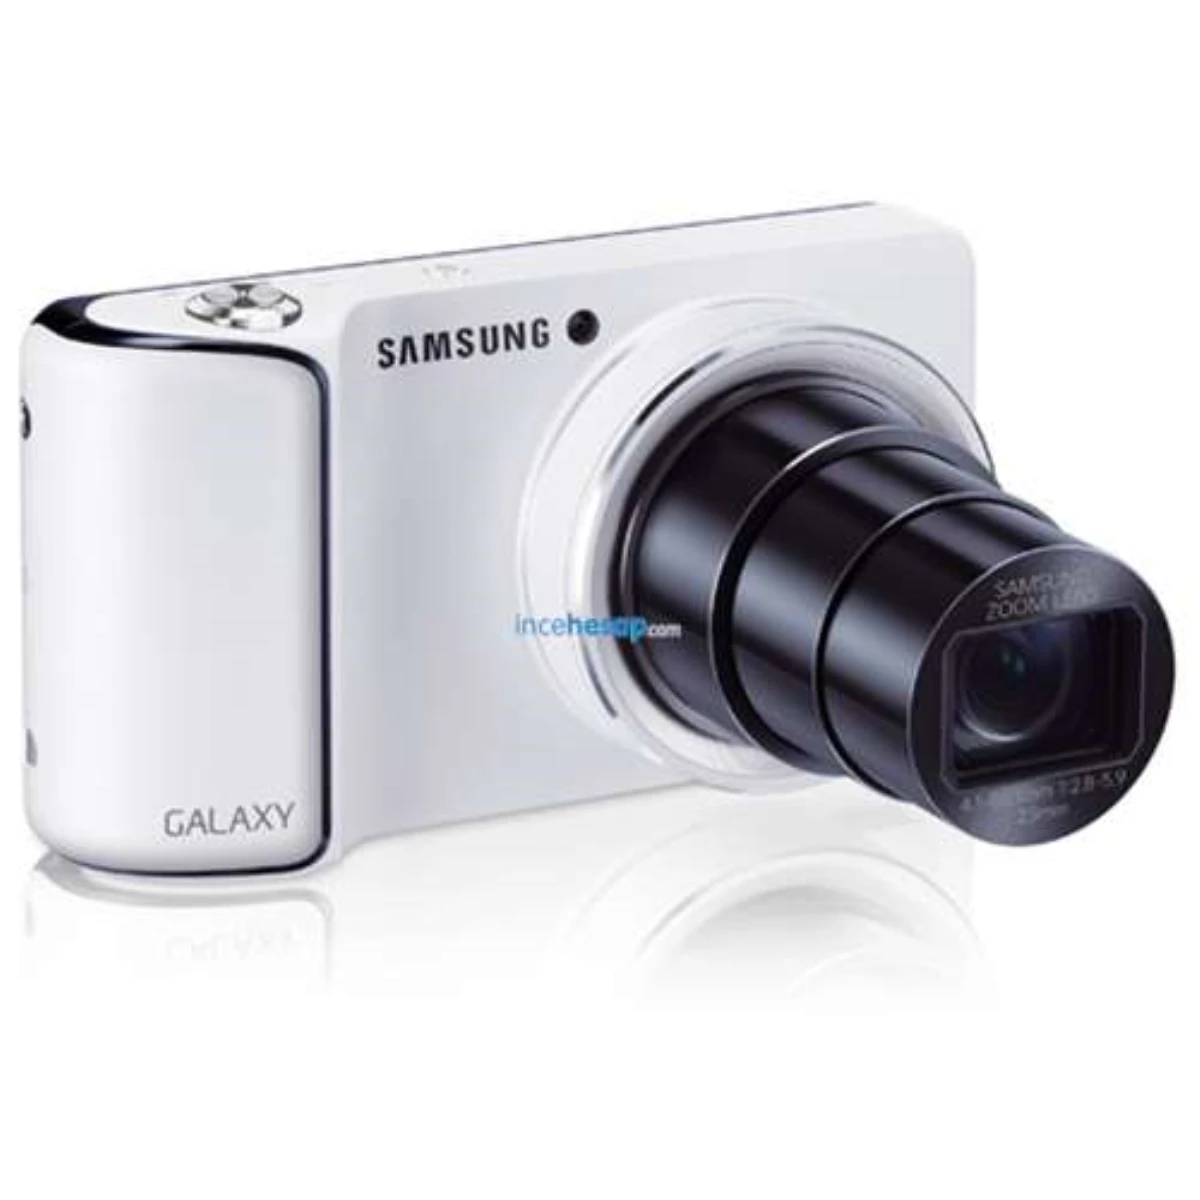 Samsung Ek-Gc100 Galaxy Kamera (3g, Wi-Fi, Android)